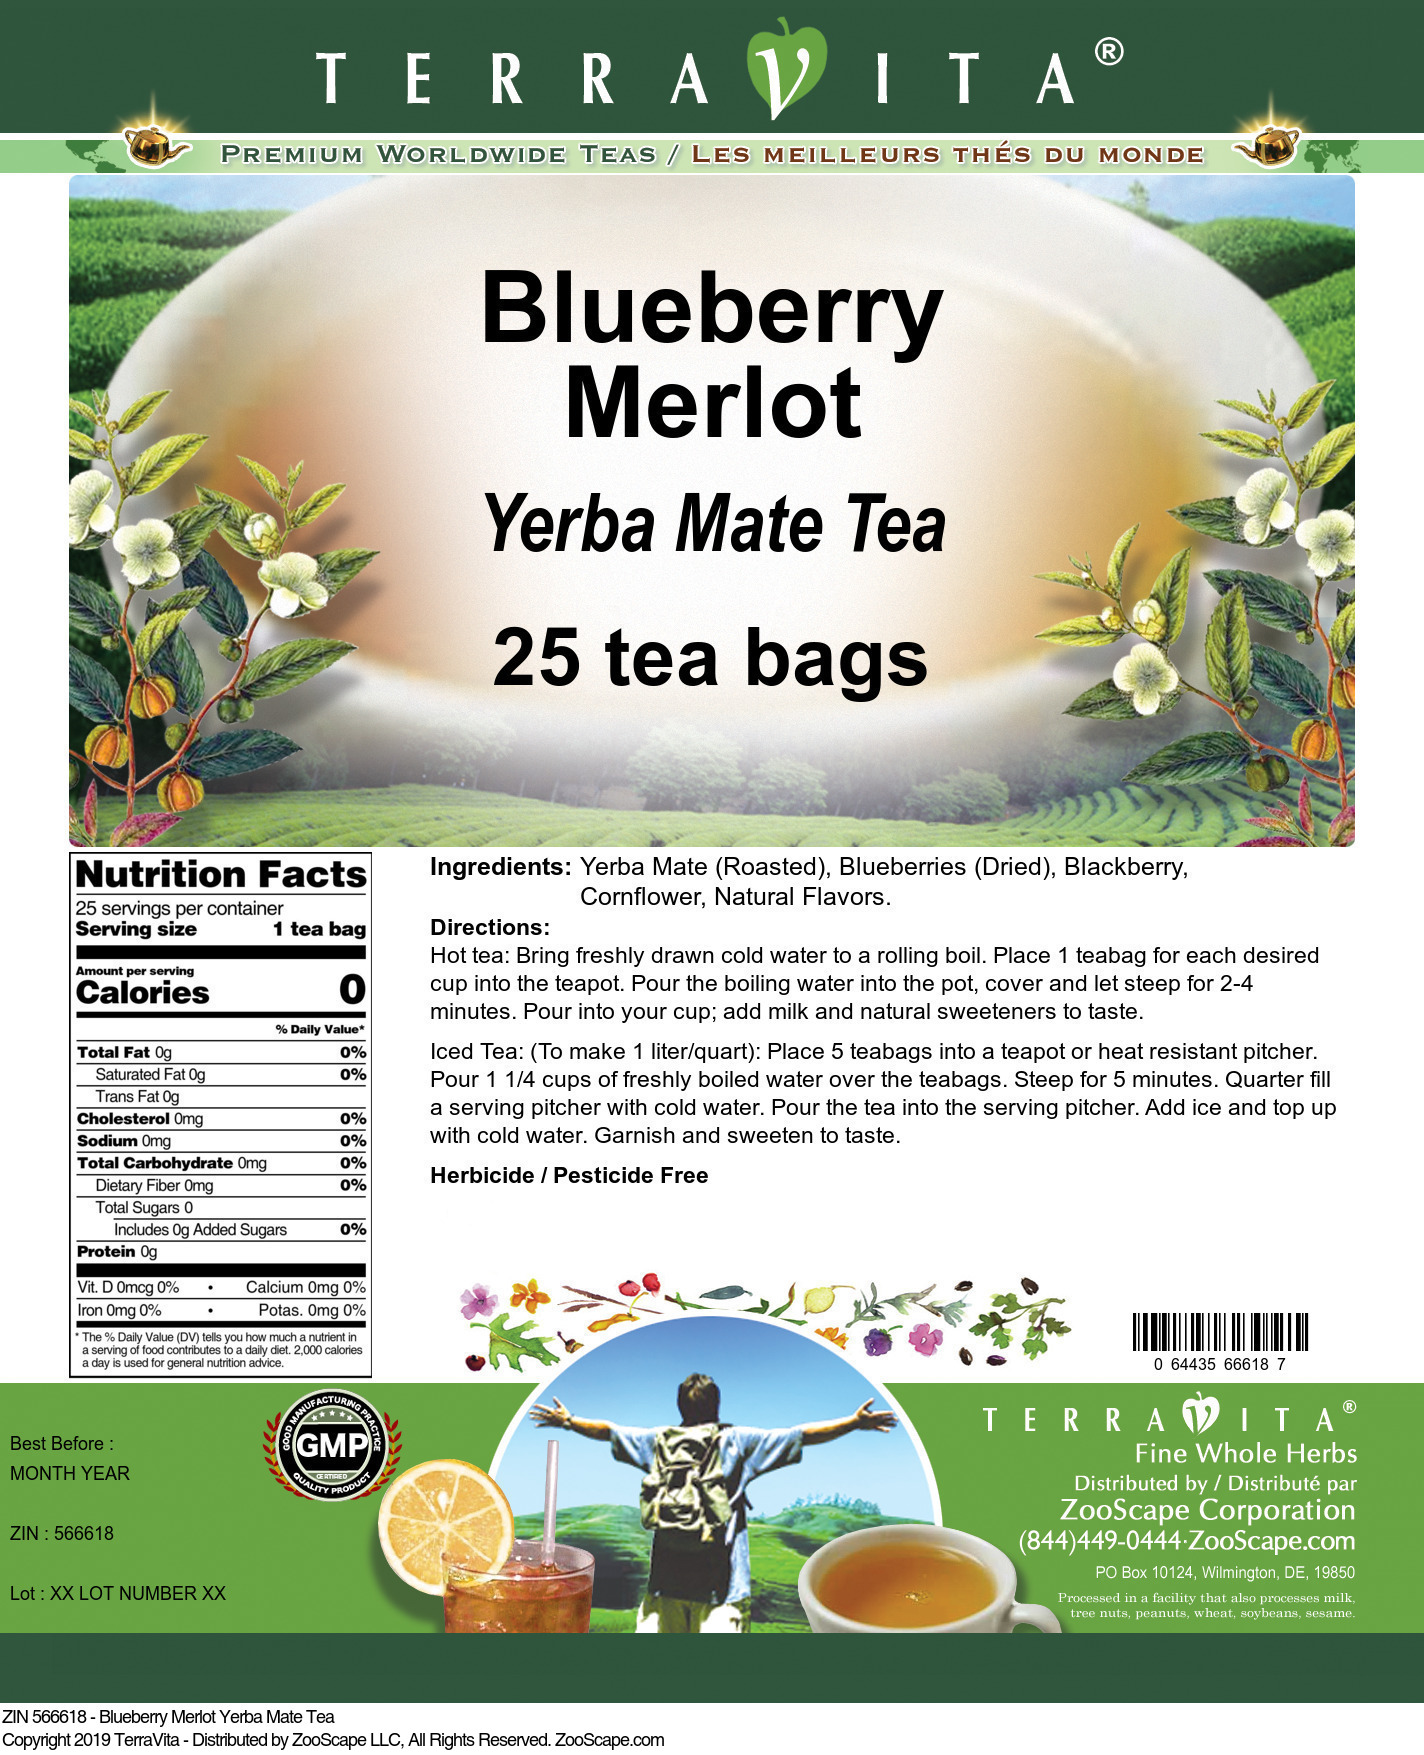 Blueberry Merlot Yerba Mate Tea - Label